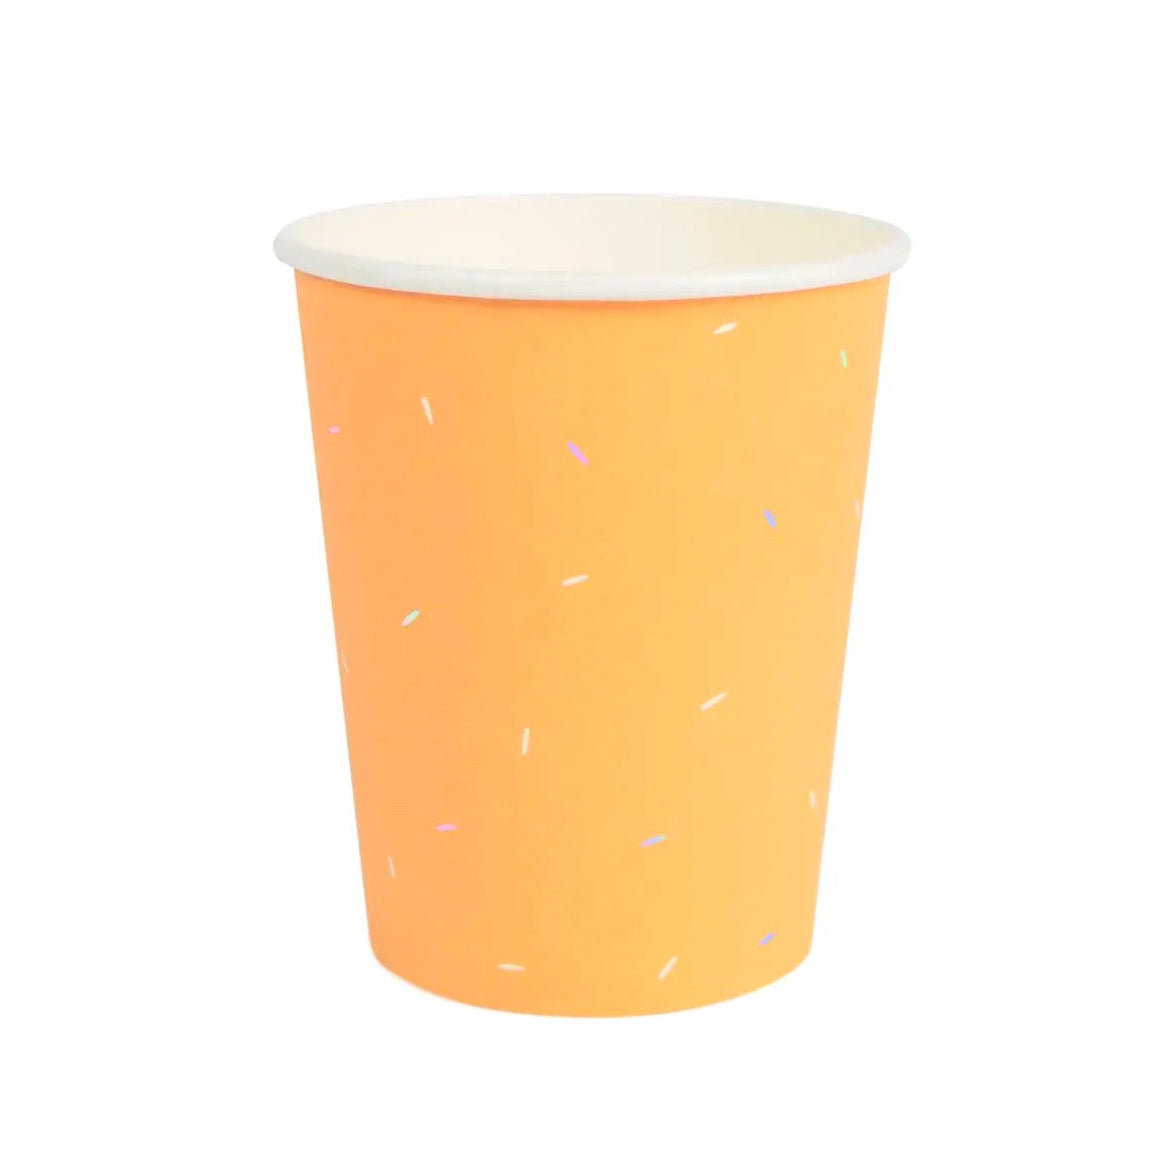 CUPS - ORANGE TANGERINE NEON